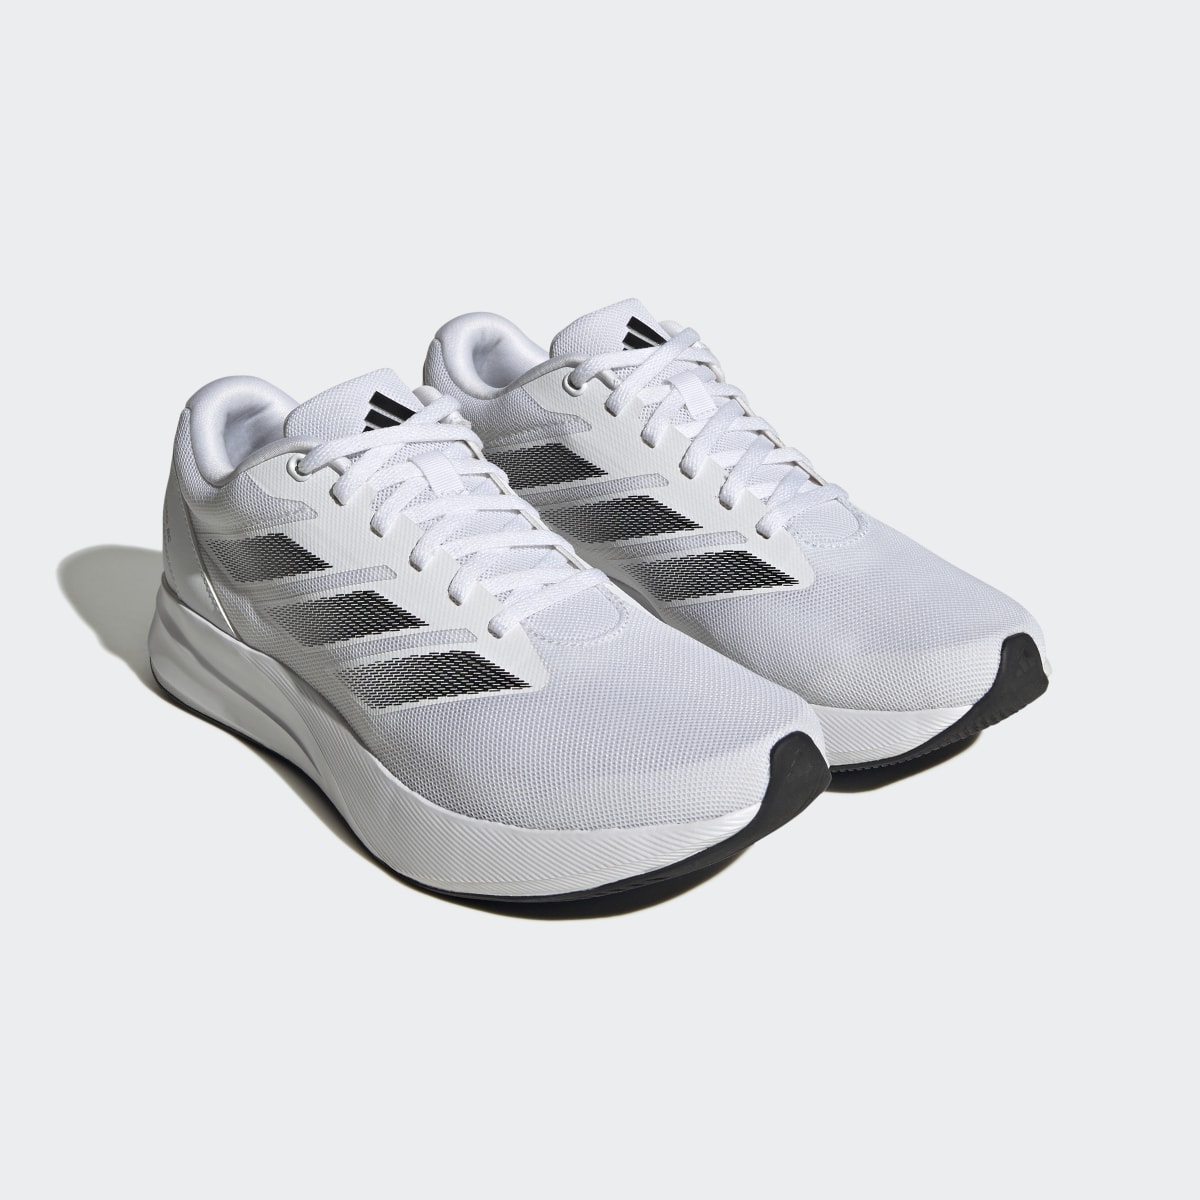 Adidas Duramo RC Shoes. 5